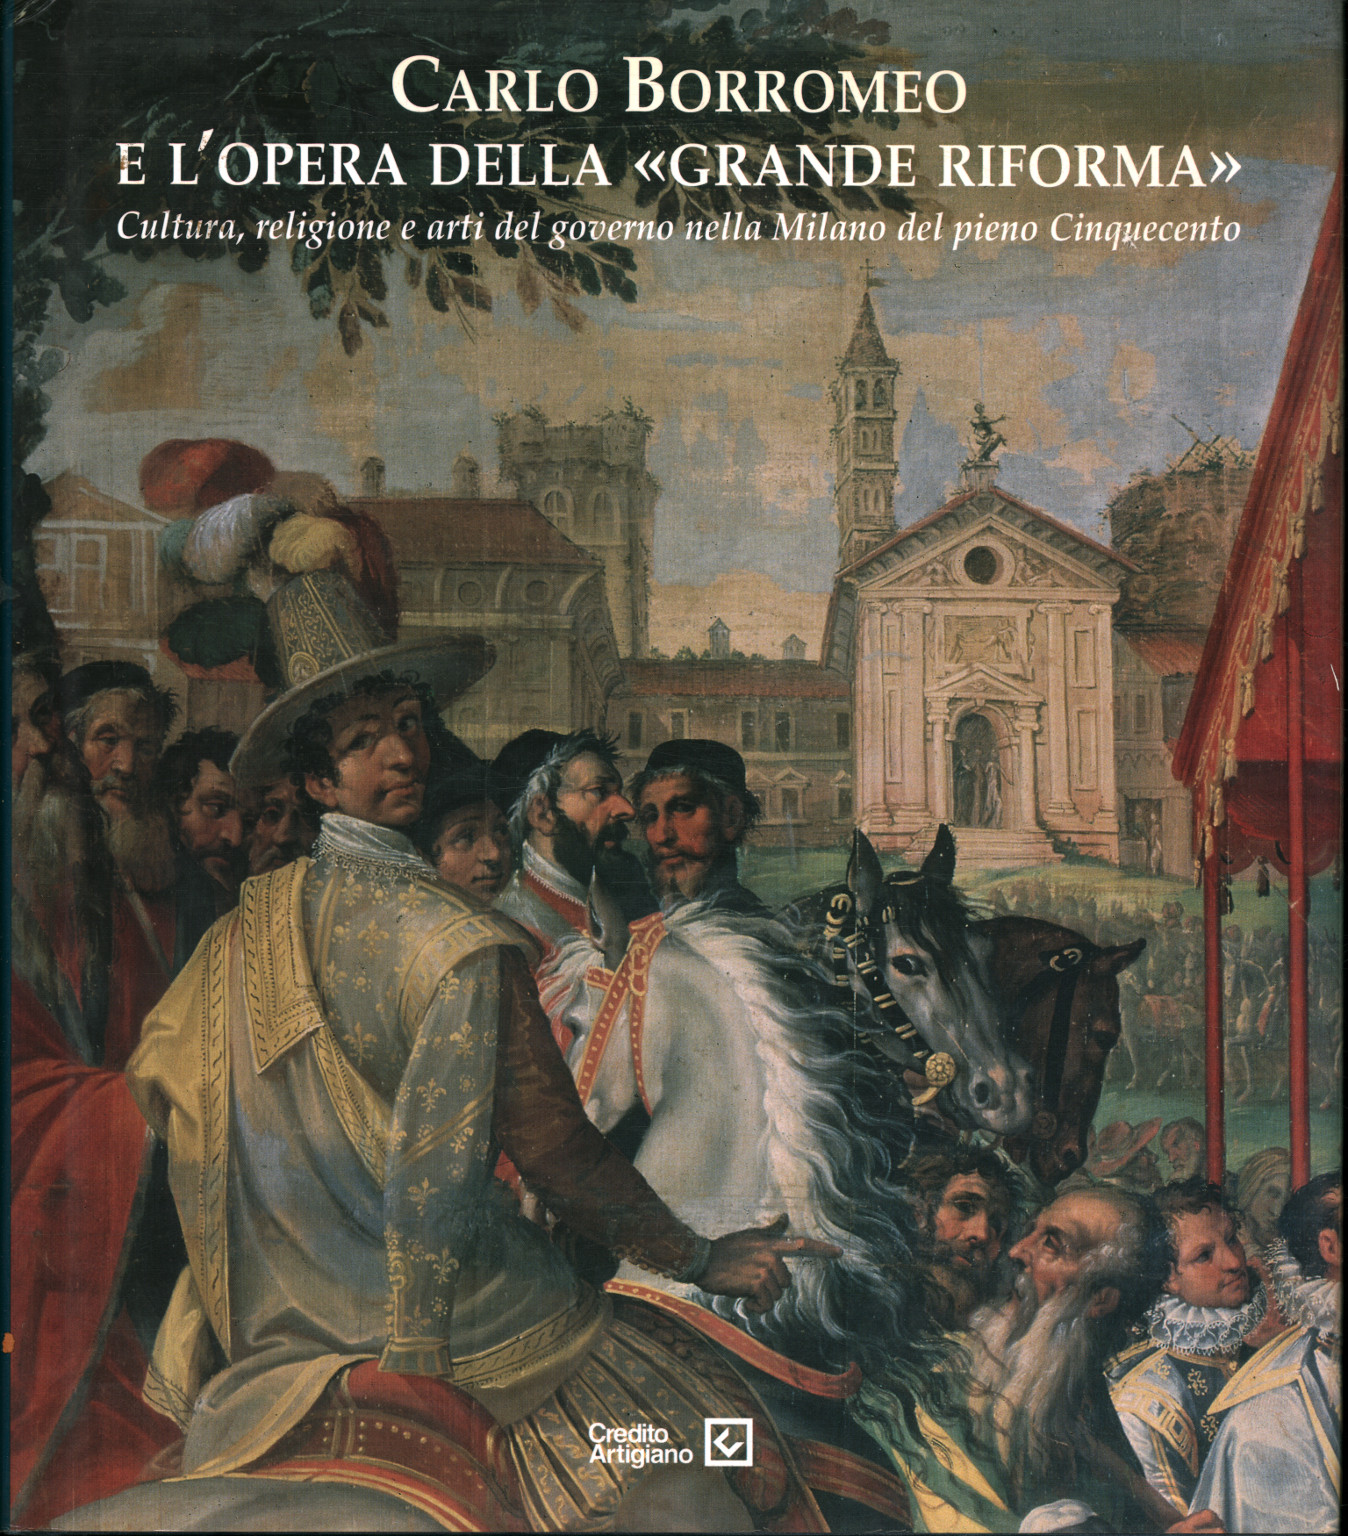 Carlo Borromeo and the work of%,Carlo Borromeo and the work of%